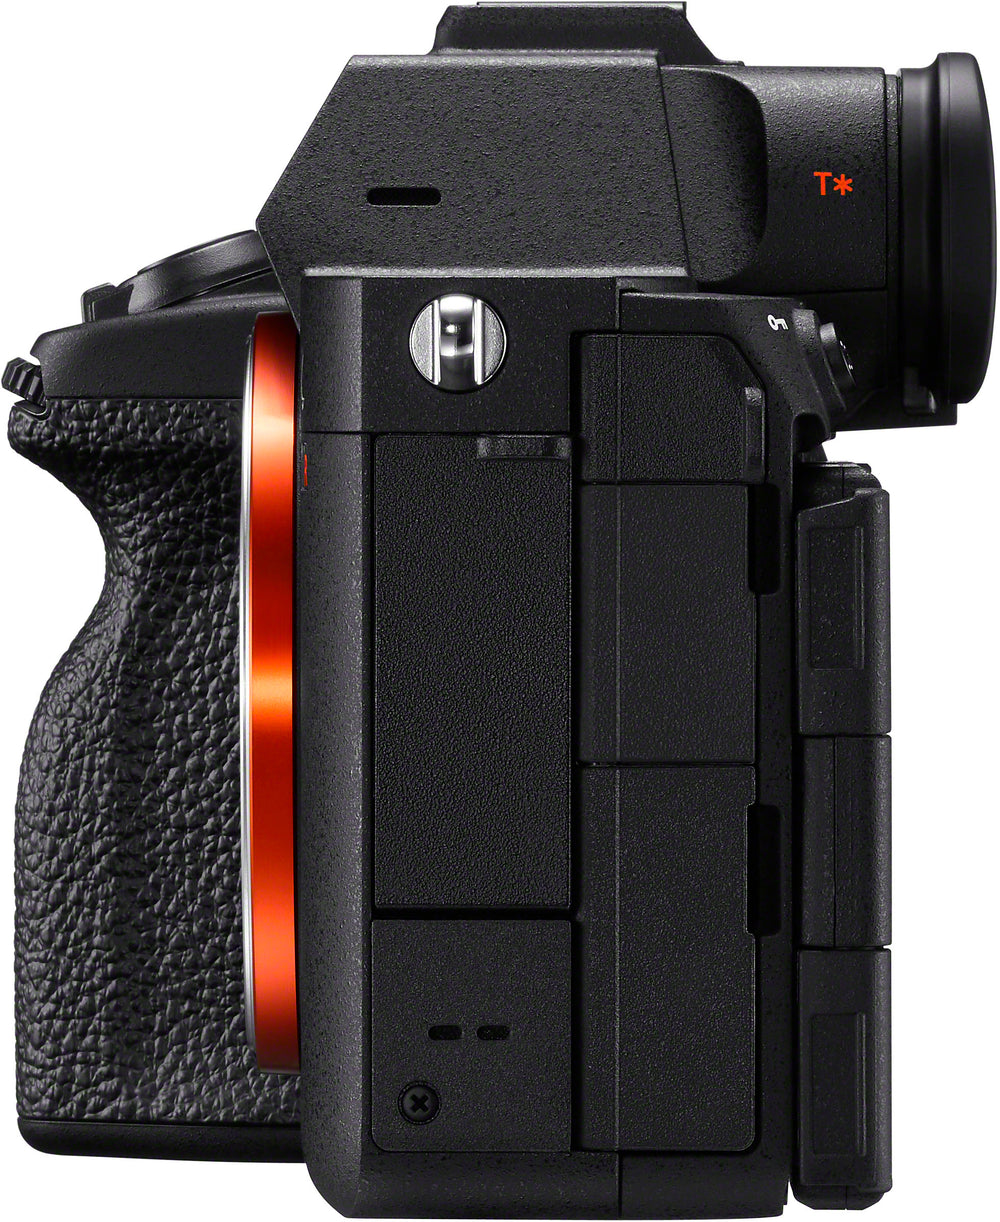 Sony - Alpha 7R V Full-frame Mirrorless Camera with Interchangeable Lens (Body Only) - Black_1